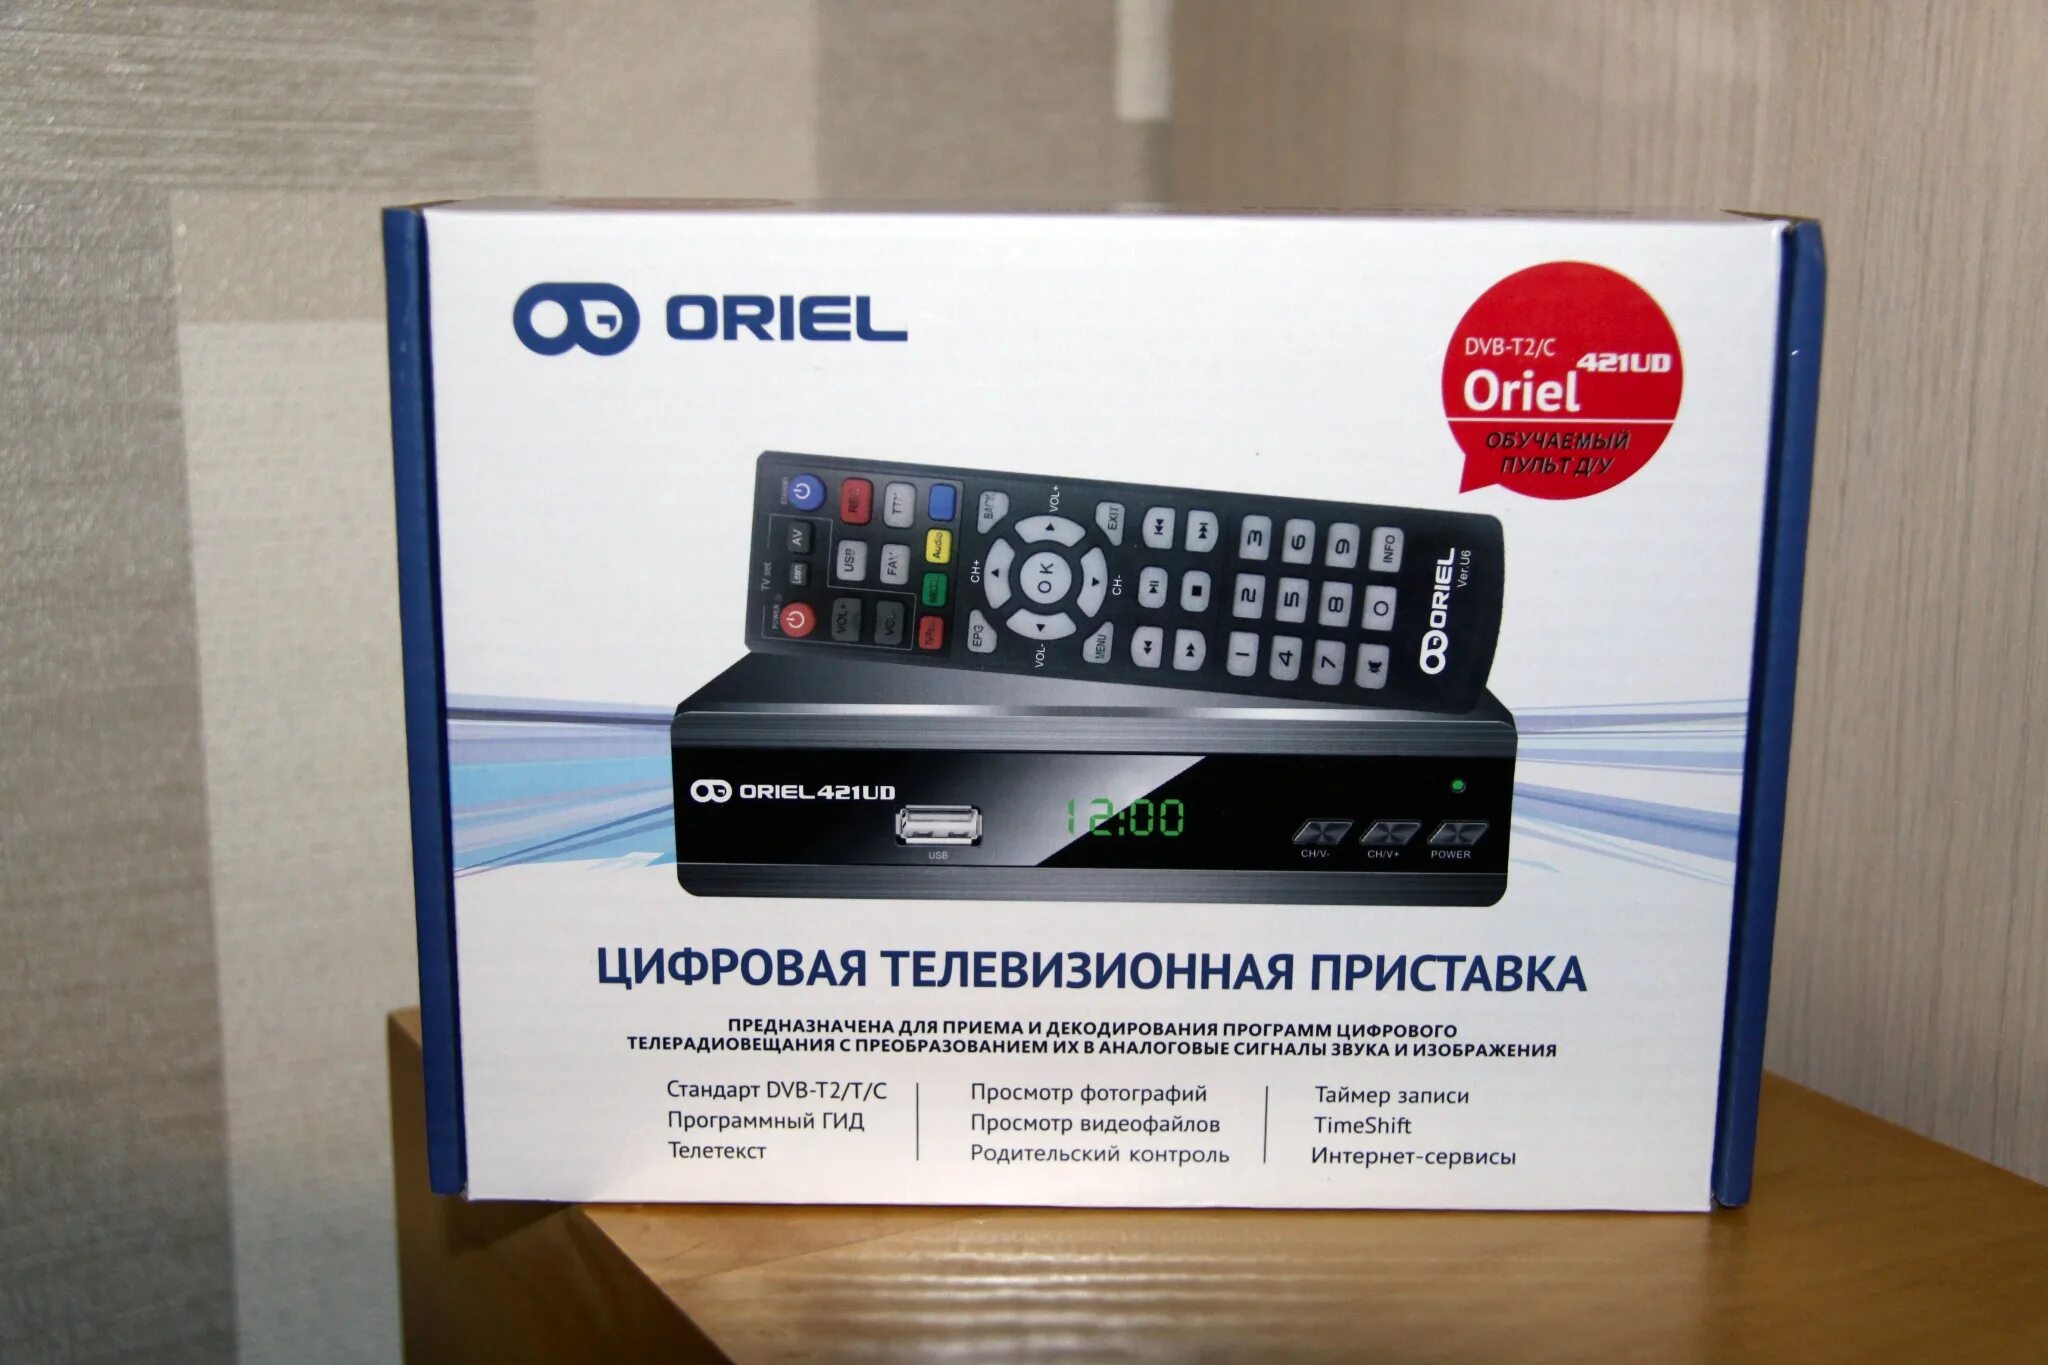 Oriel 421ud. DVB-t2-ресивер 421ud. Телевизионная абонентская приставка Oriel 421ud. Oriel 120.